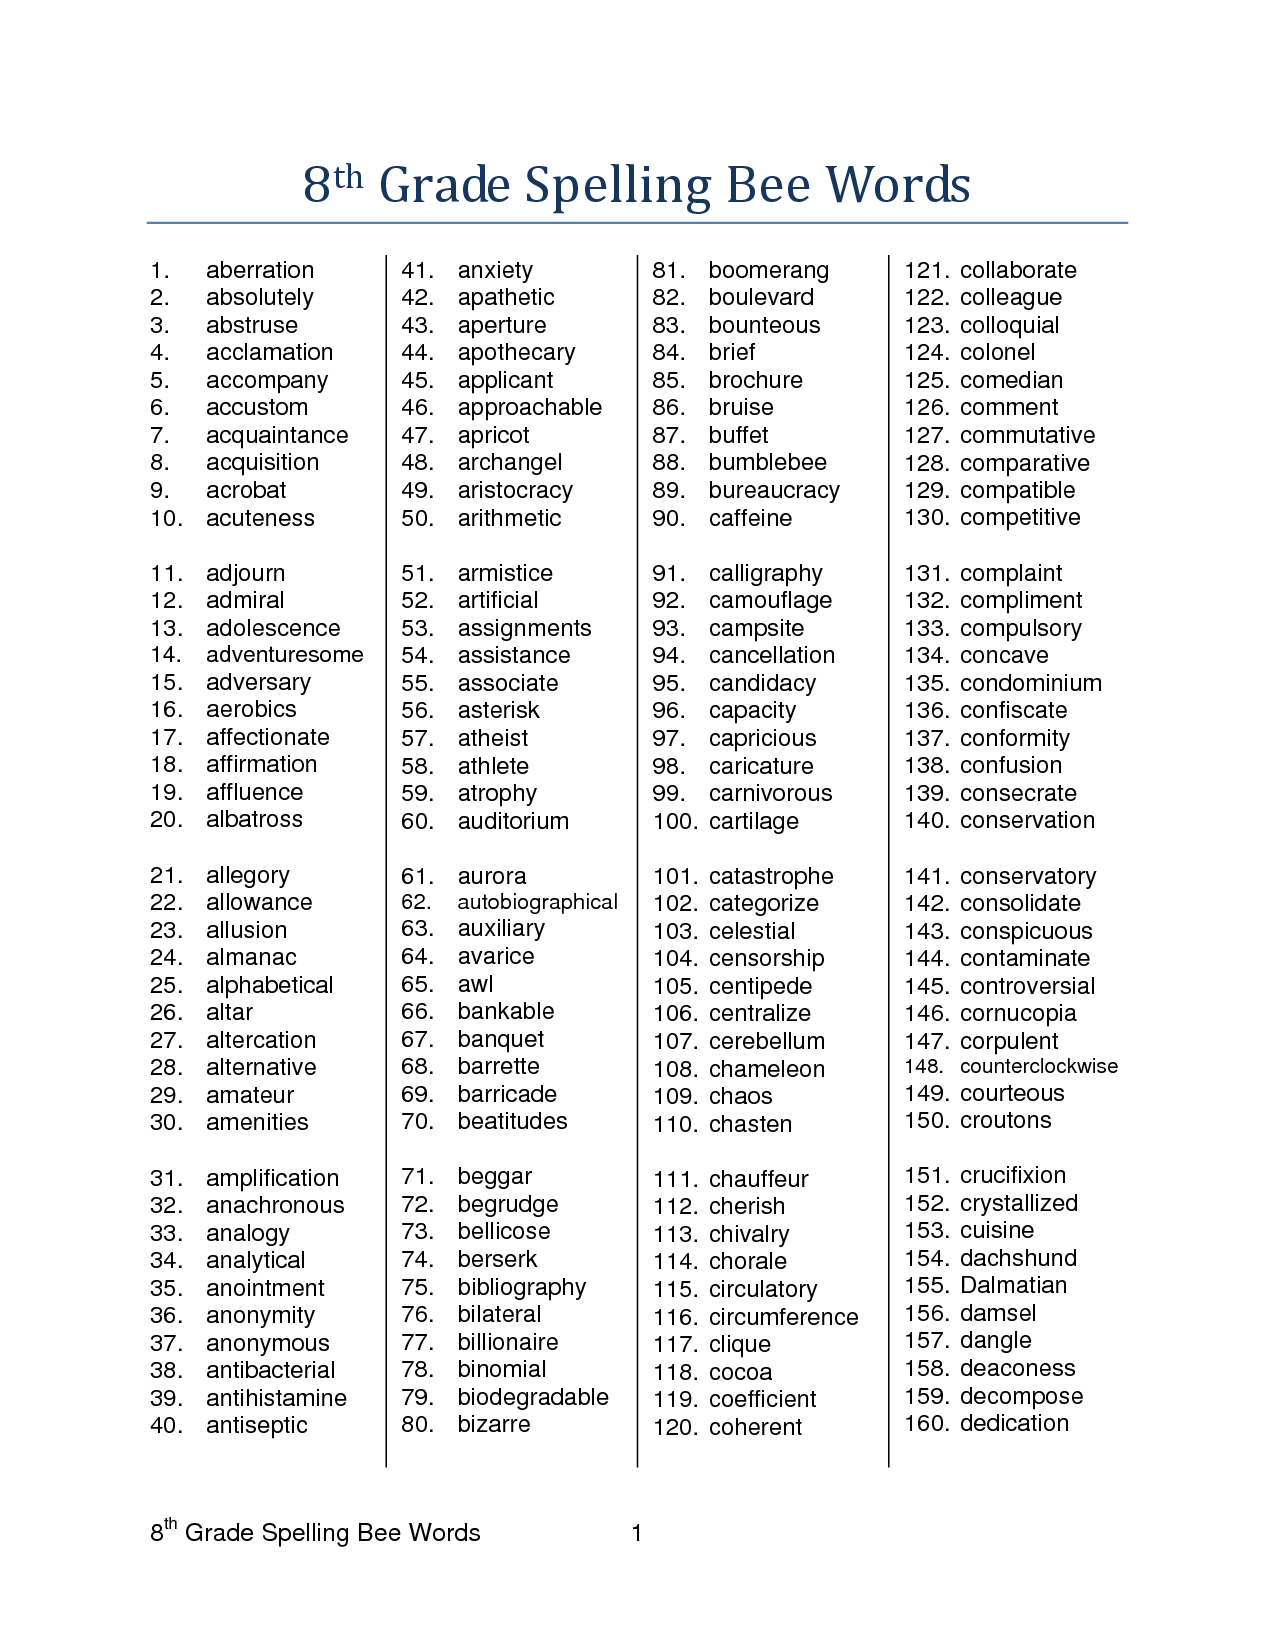 8th Grade Spelling Bee Word List Image